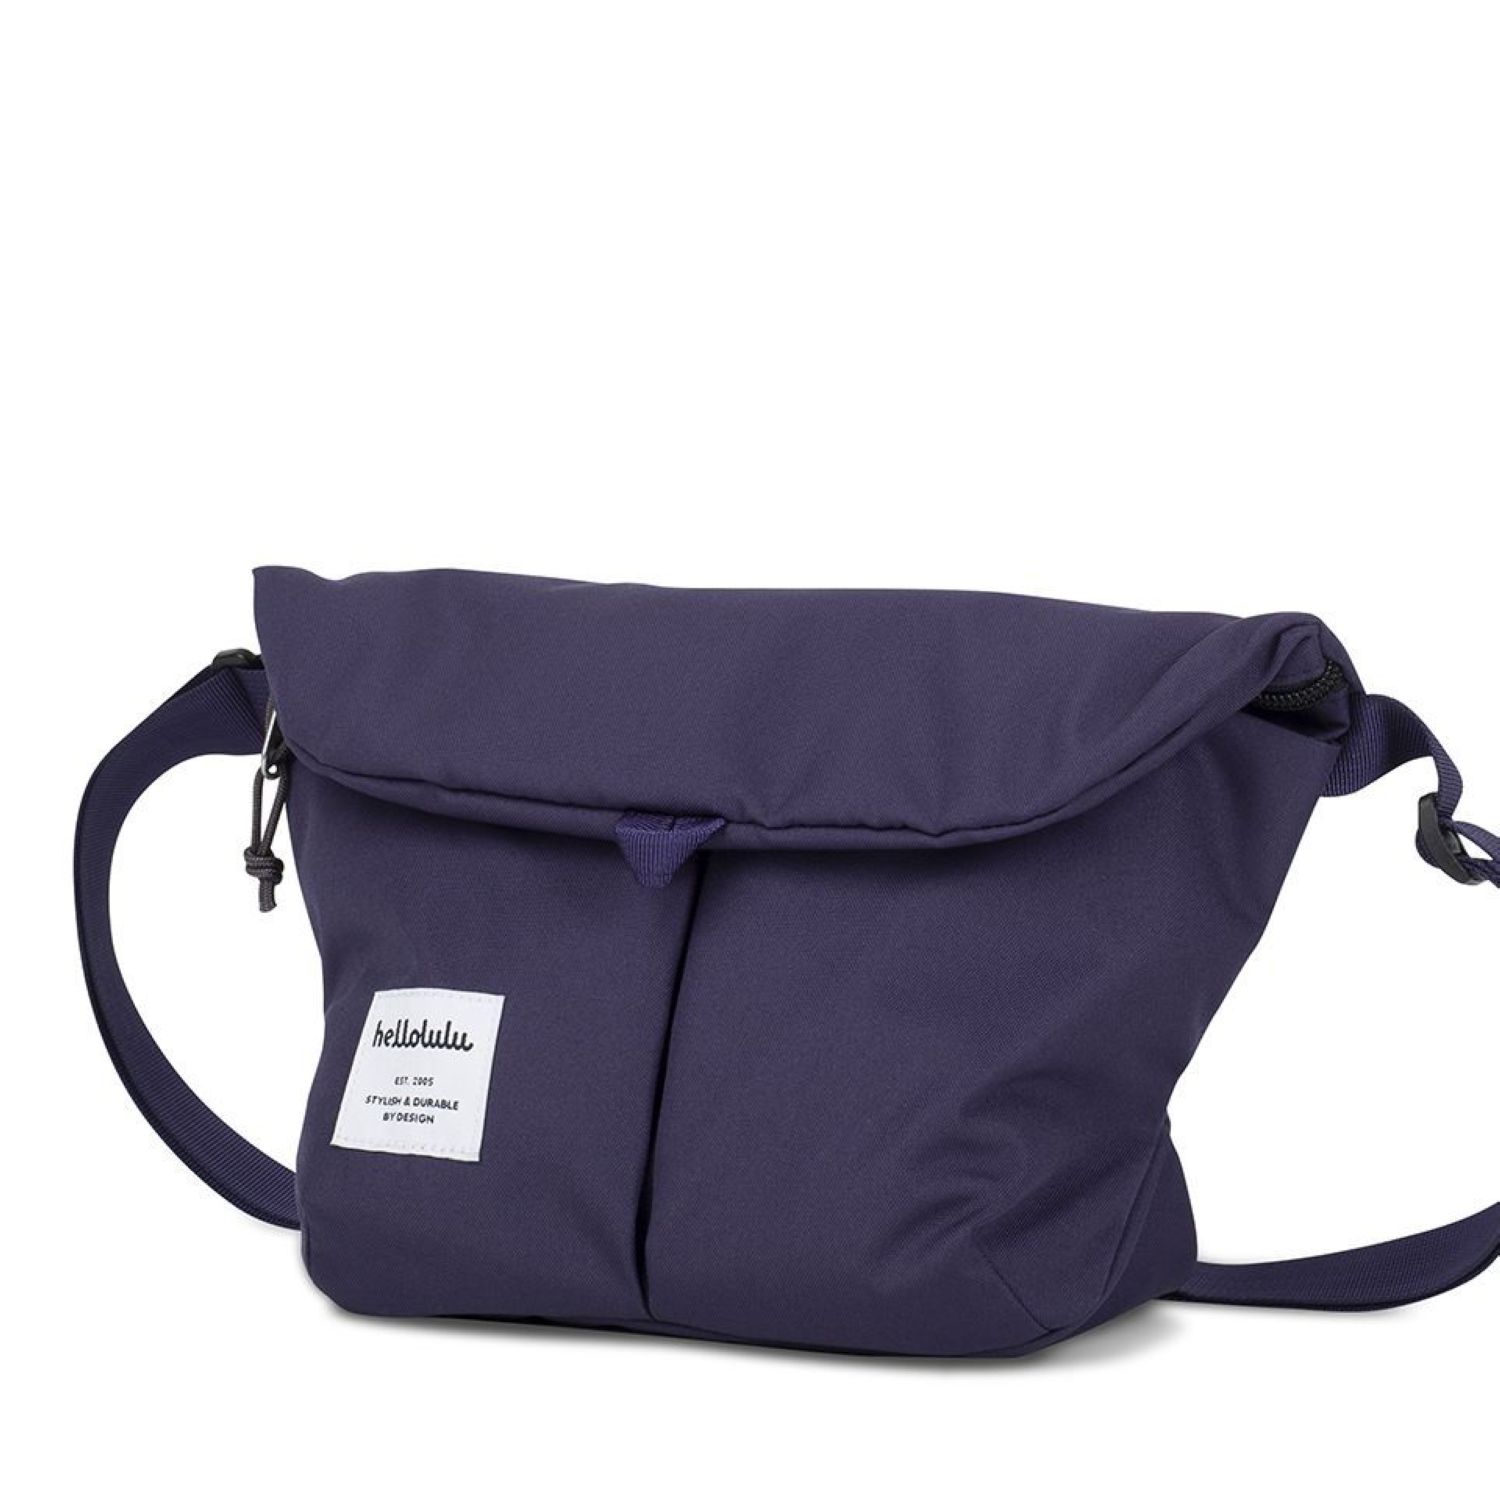 Hellolulu Mini Kasen All Day Shoulder Bag (Dark Blue) - Hellolulu Singapore